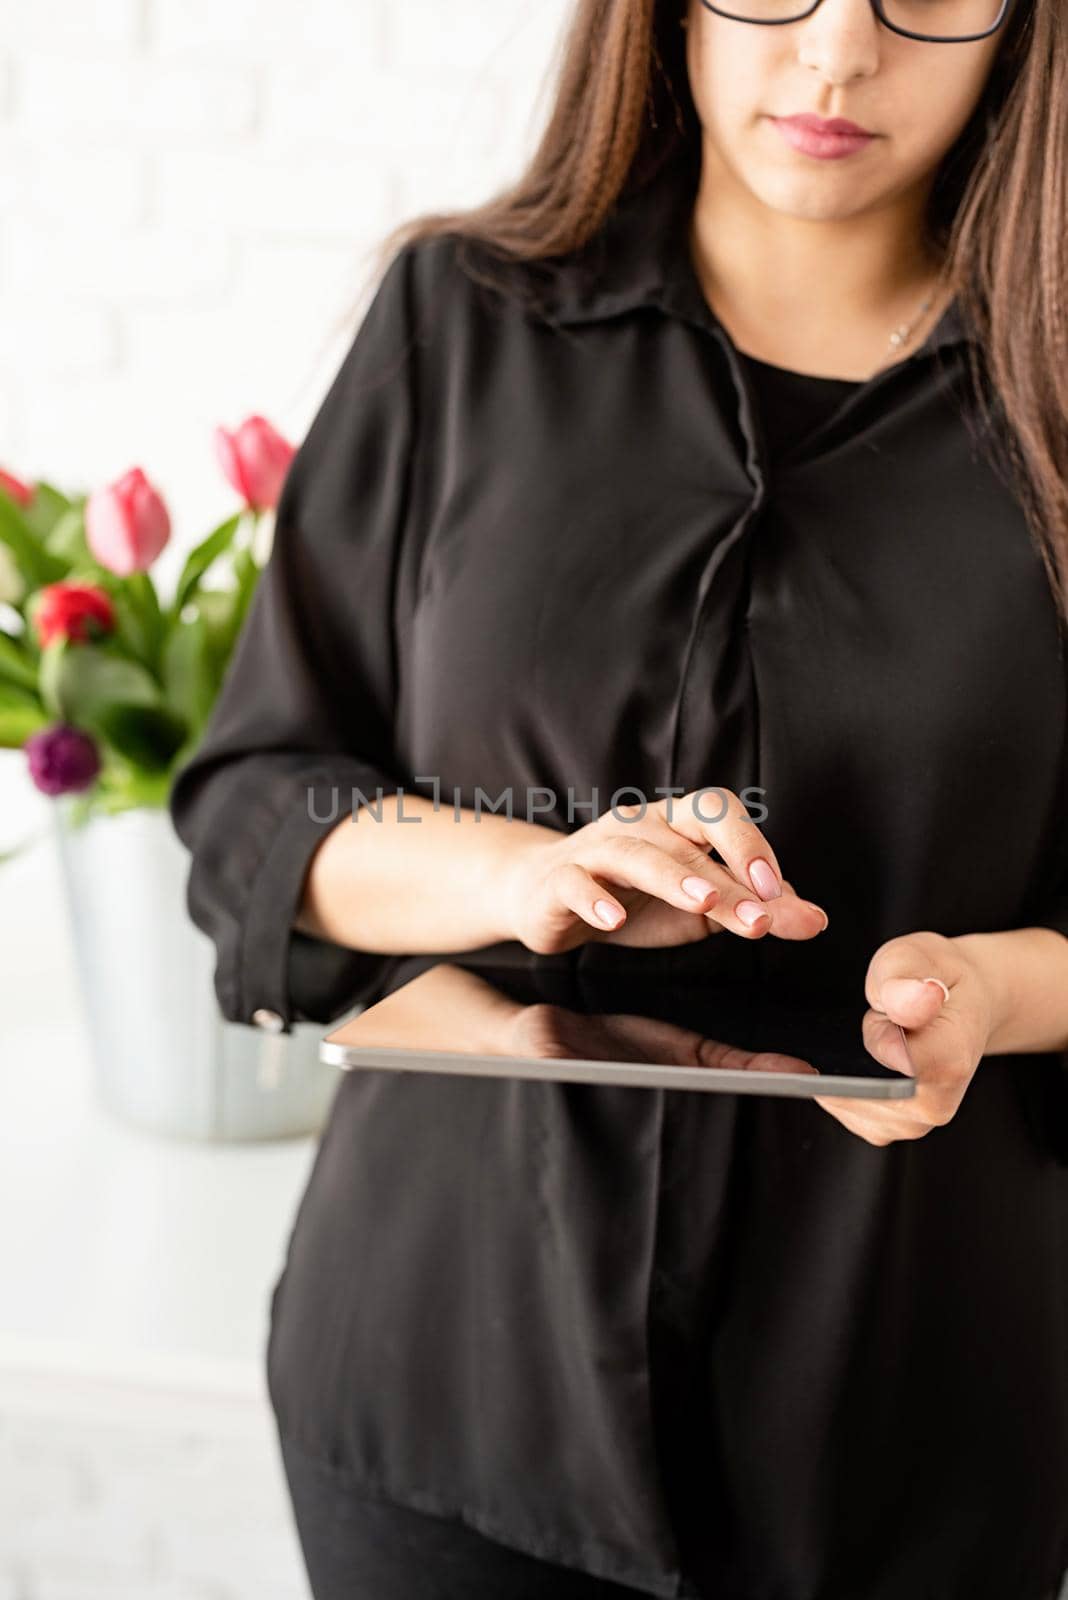 woman hands working on digital tablet, bucket of fresh tulips on background by Desperada